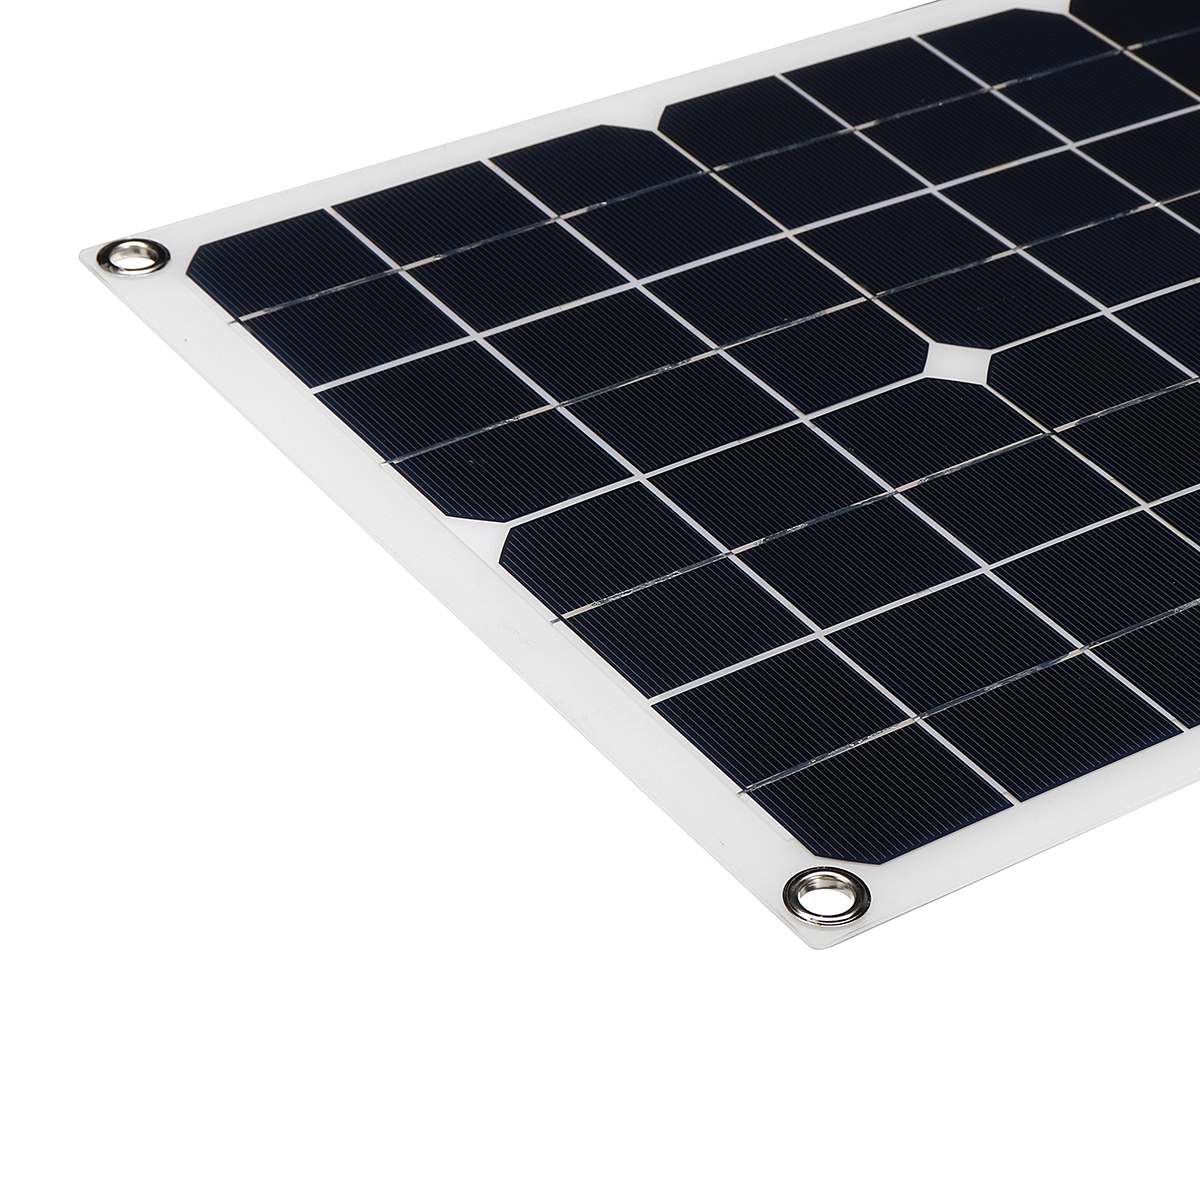 20W 430*280*2.5mm Monocrystalline Solar Panel with 18V DC Plug & 5V USB Output High Efficiency & Light Weight 6